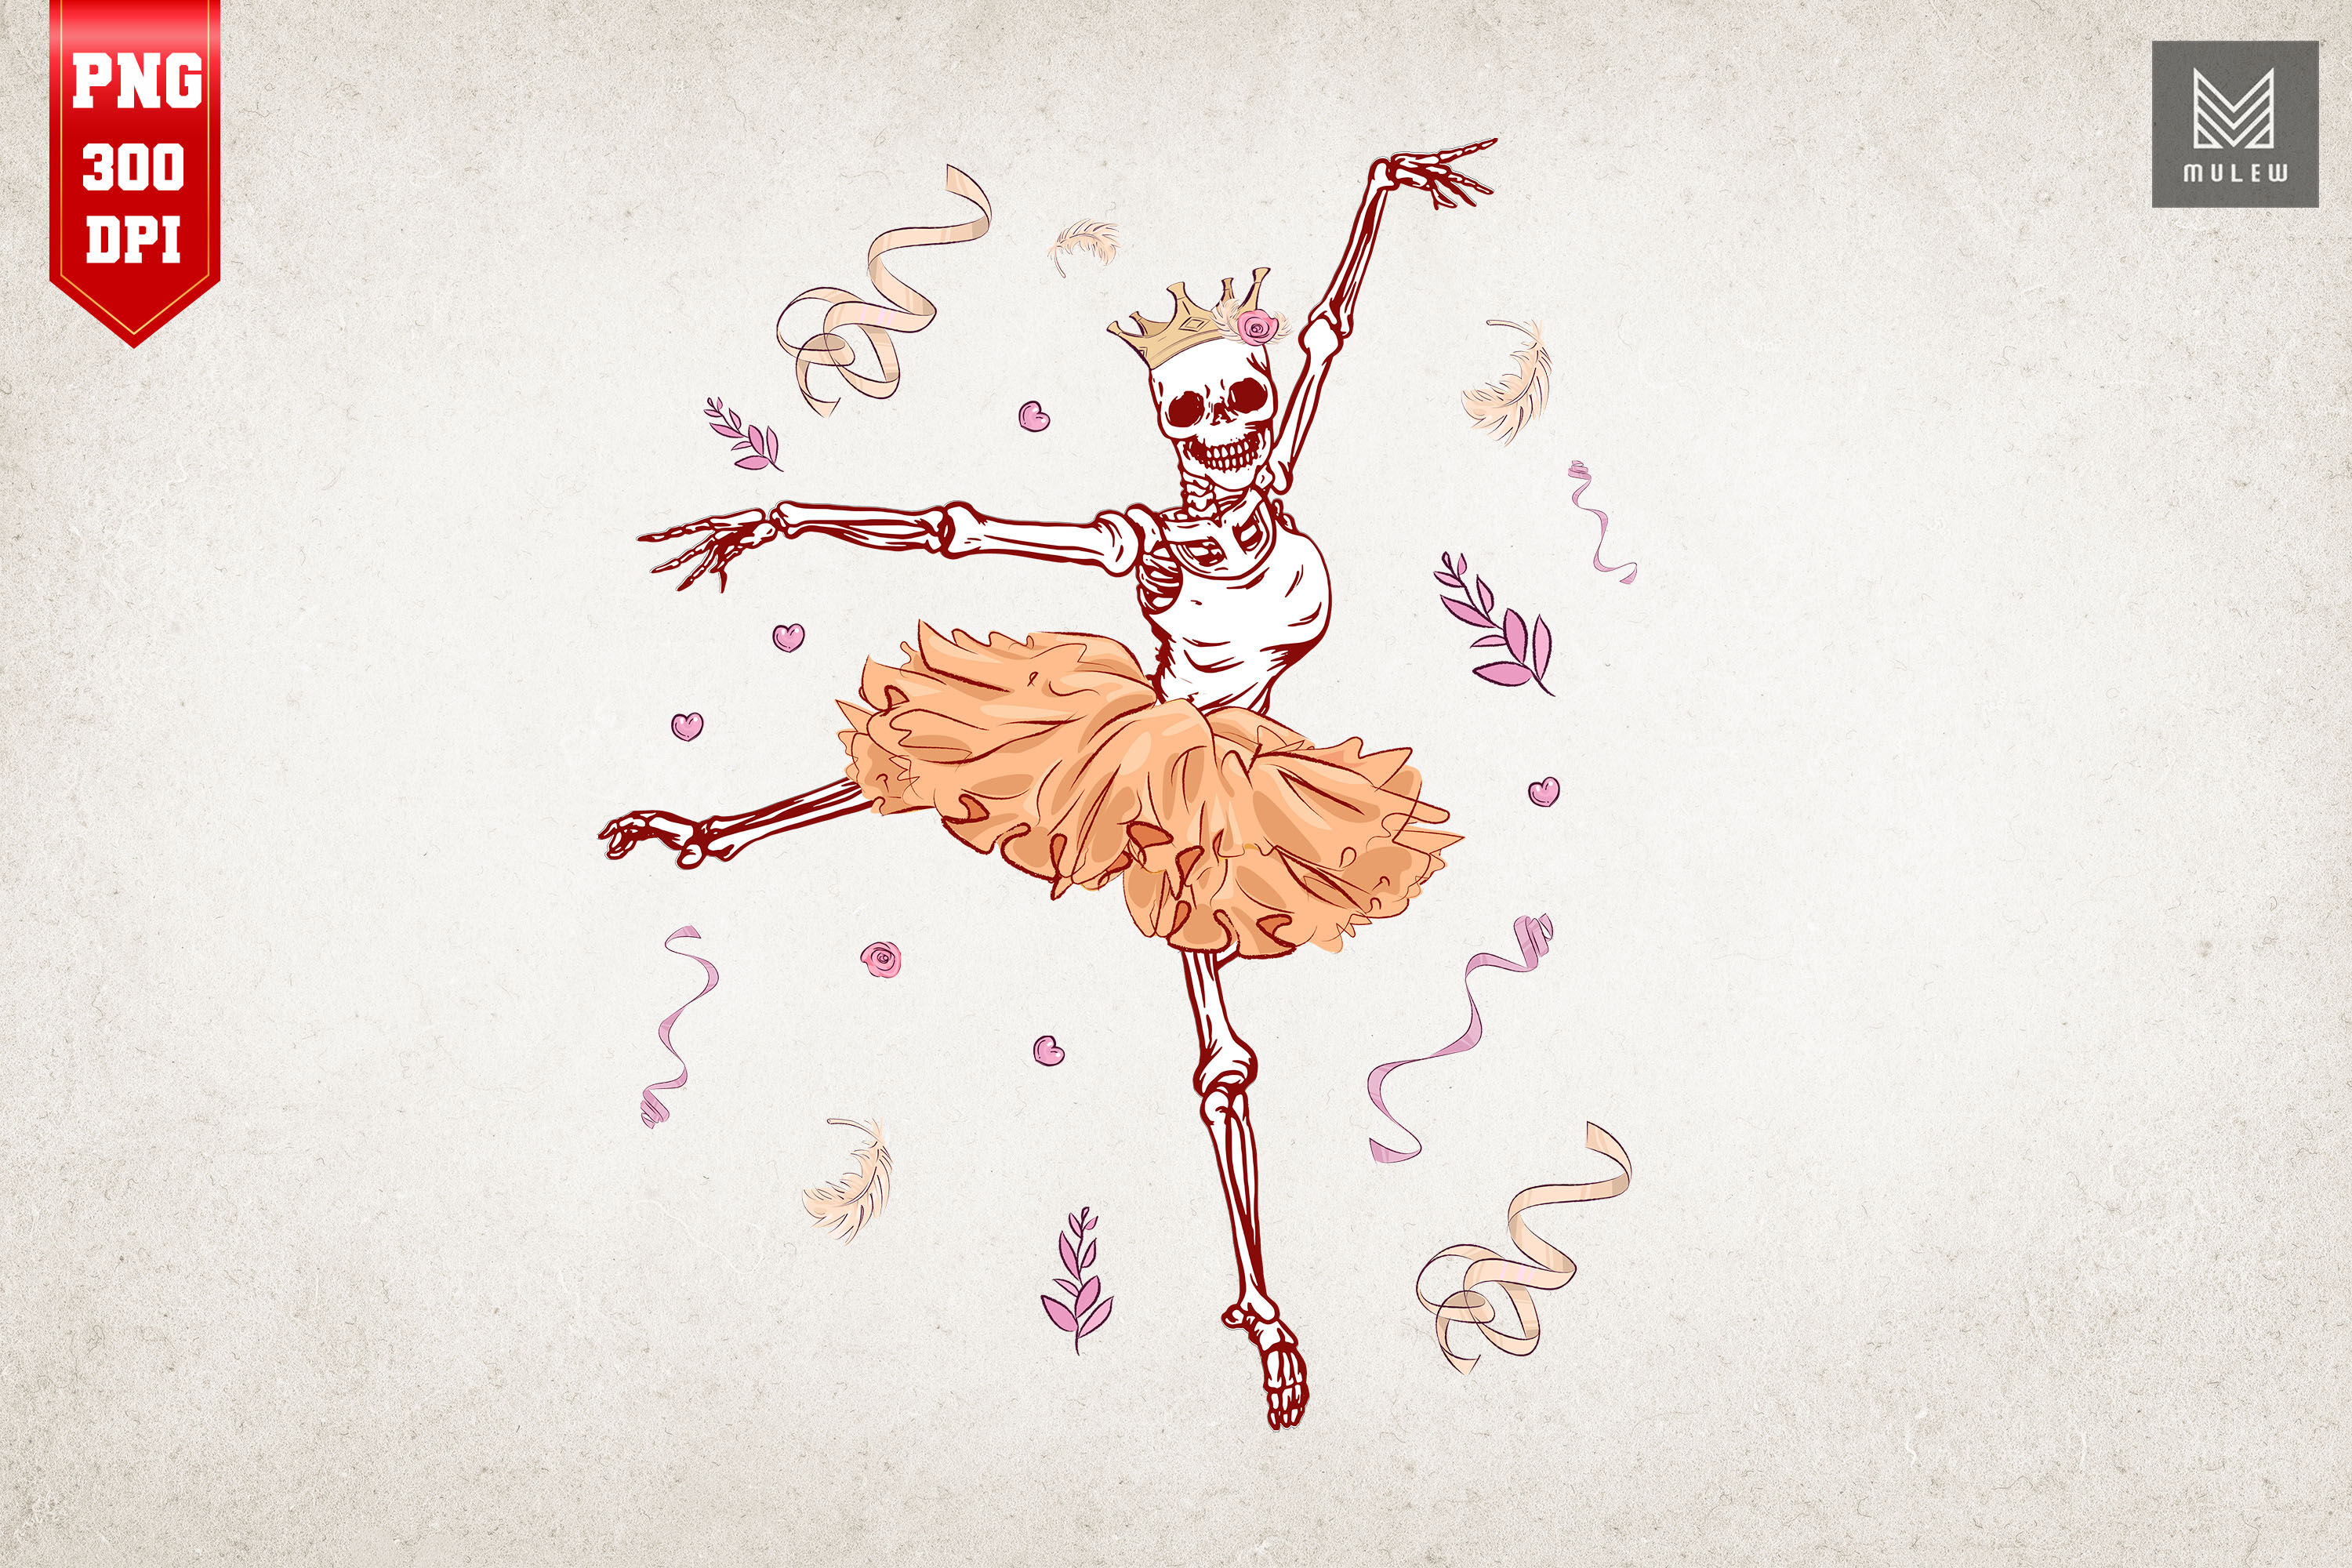 veltalende forbinde Notesbog Dancing Skeleton Ballerina Halloween By Mulew Art | TheHungryJPEG